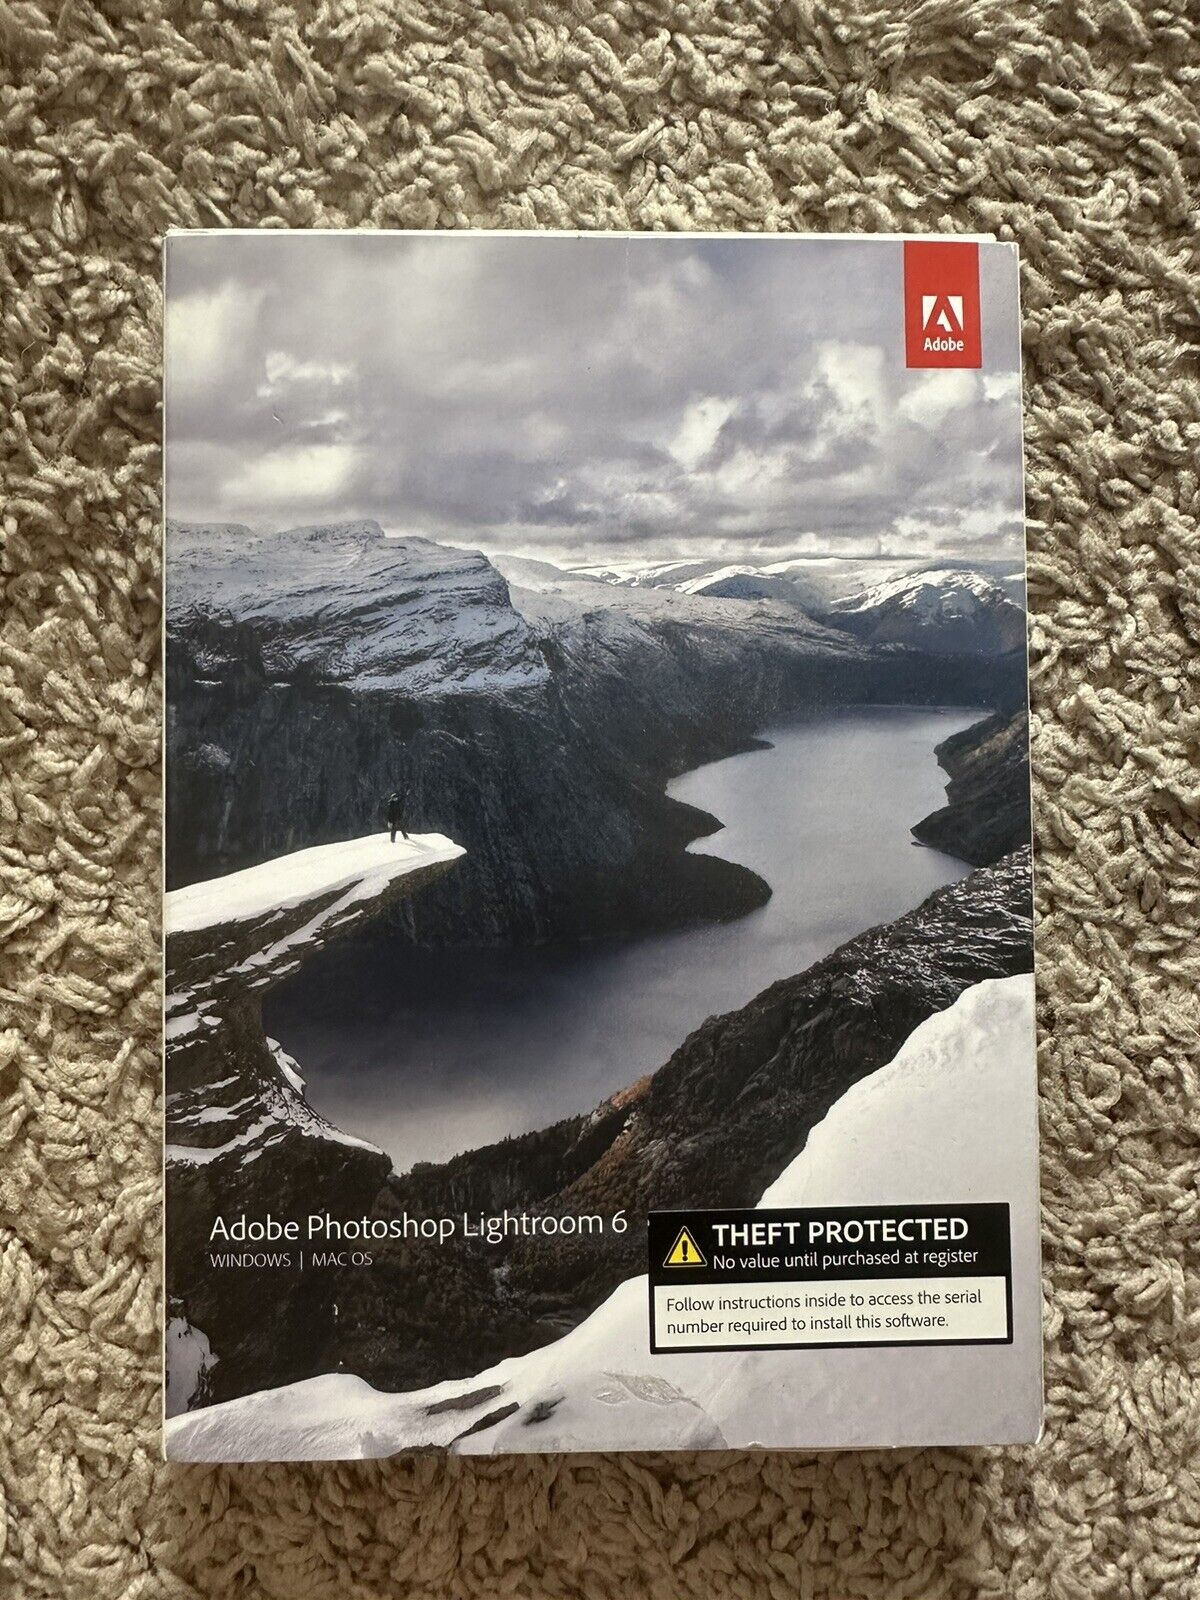 Adobe Photoshop Lightroom 6 for Win/Mac Full Retail Version